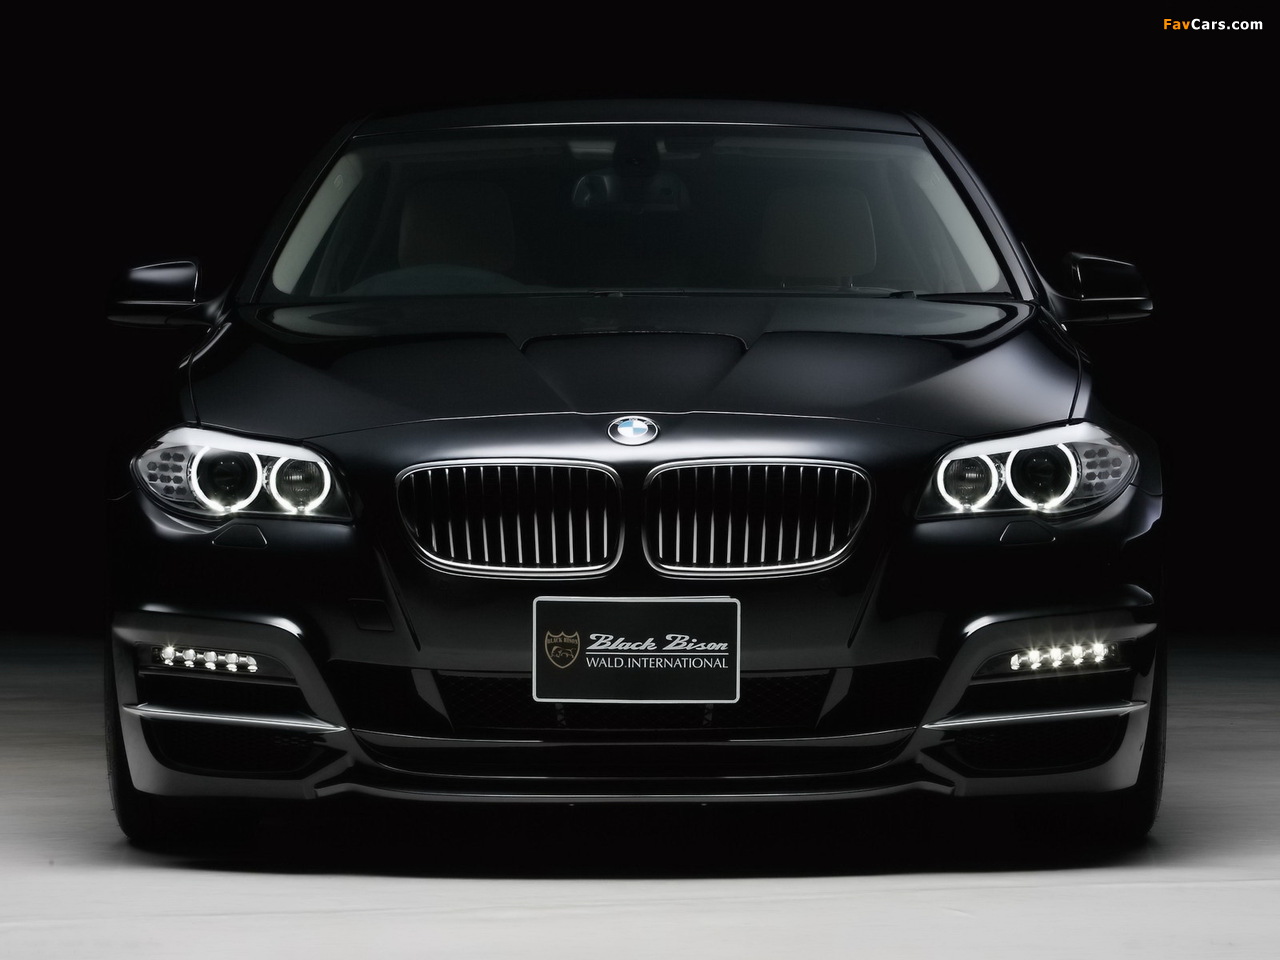 WALD BMW 5 Series Black Bison Edition (F10) 2011 photos (1280 x 960)